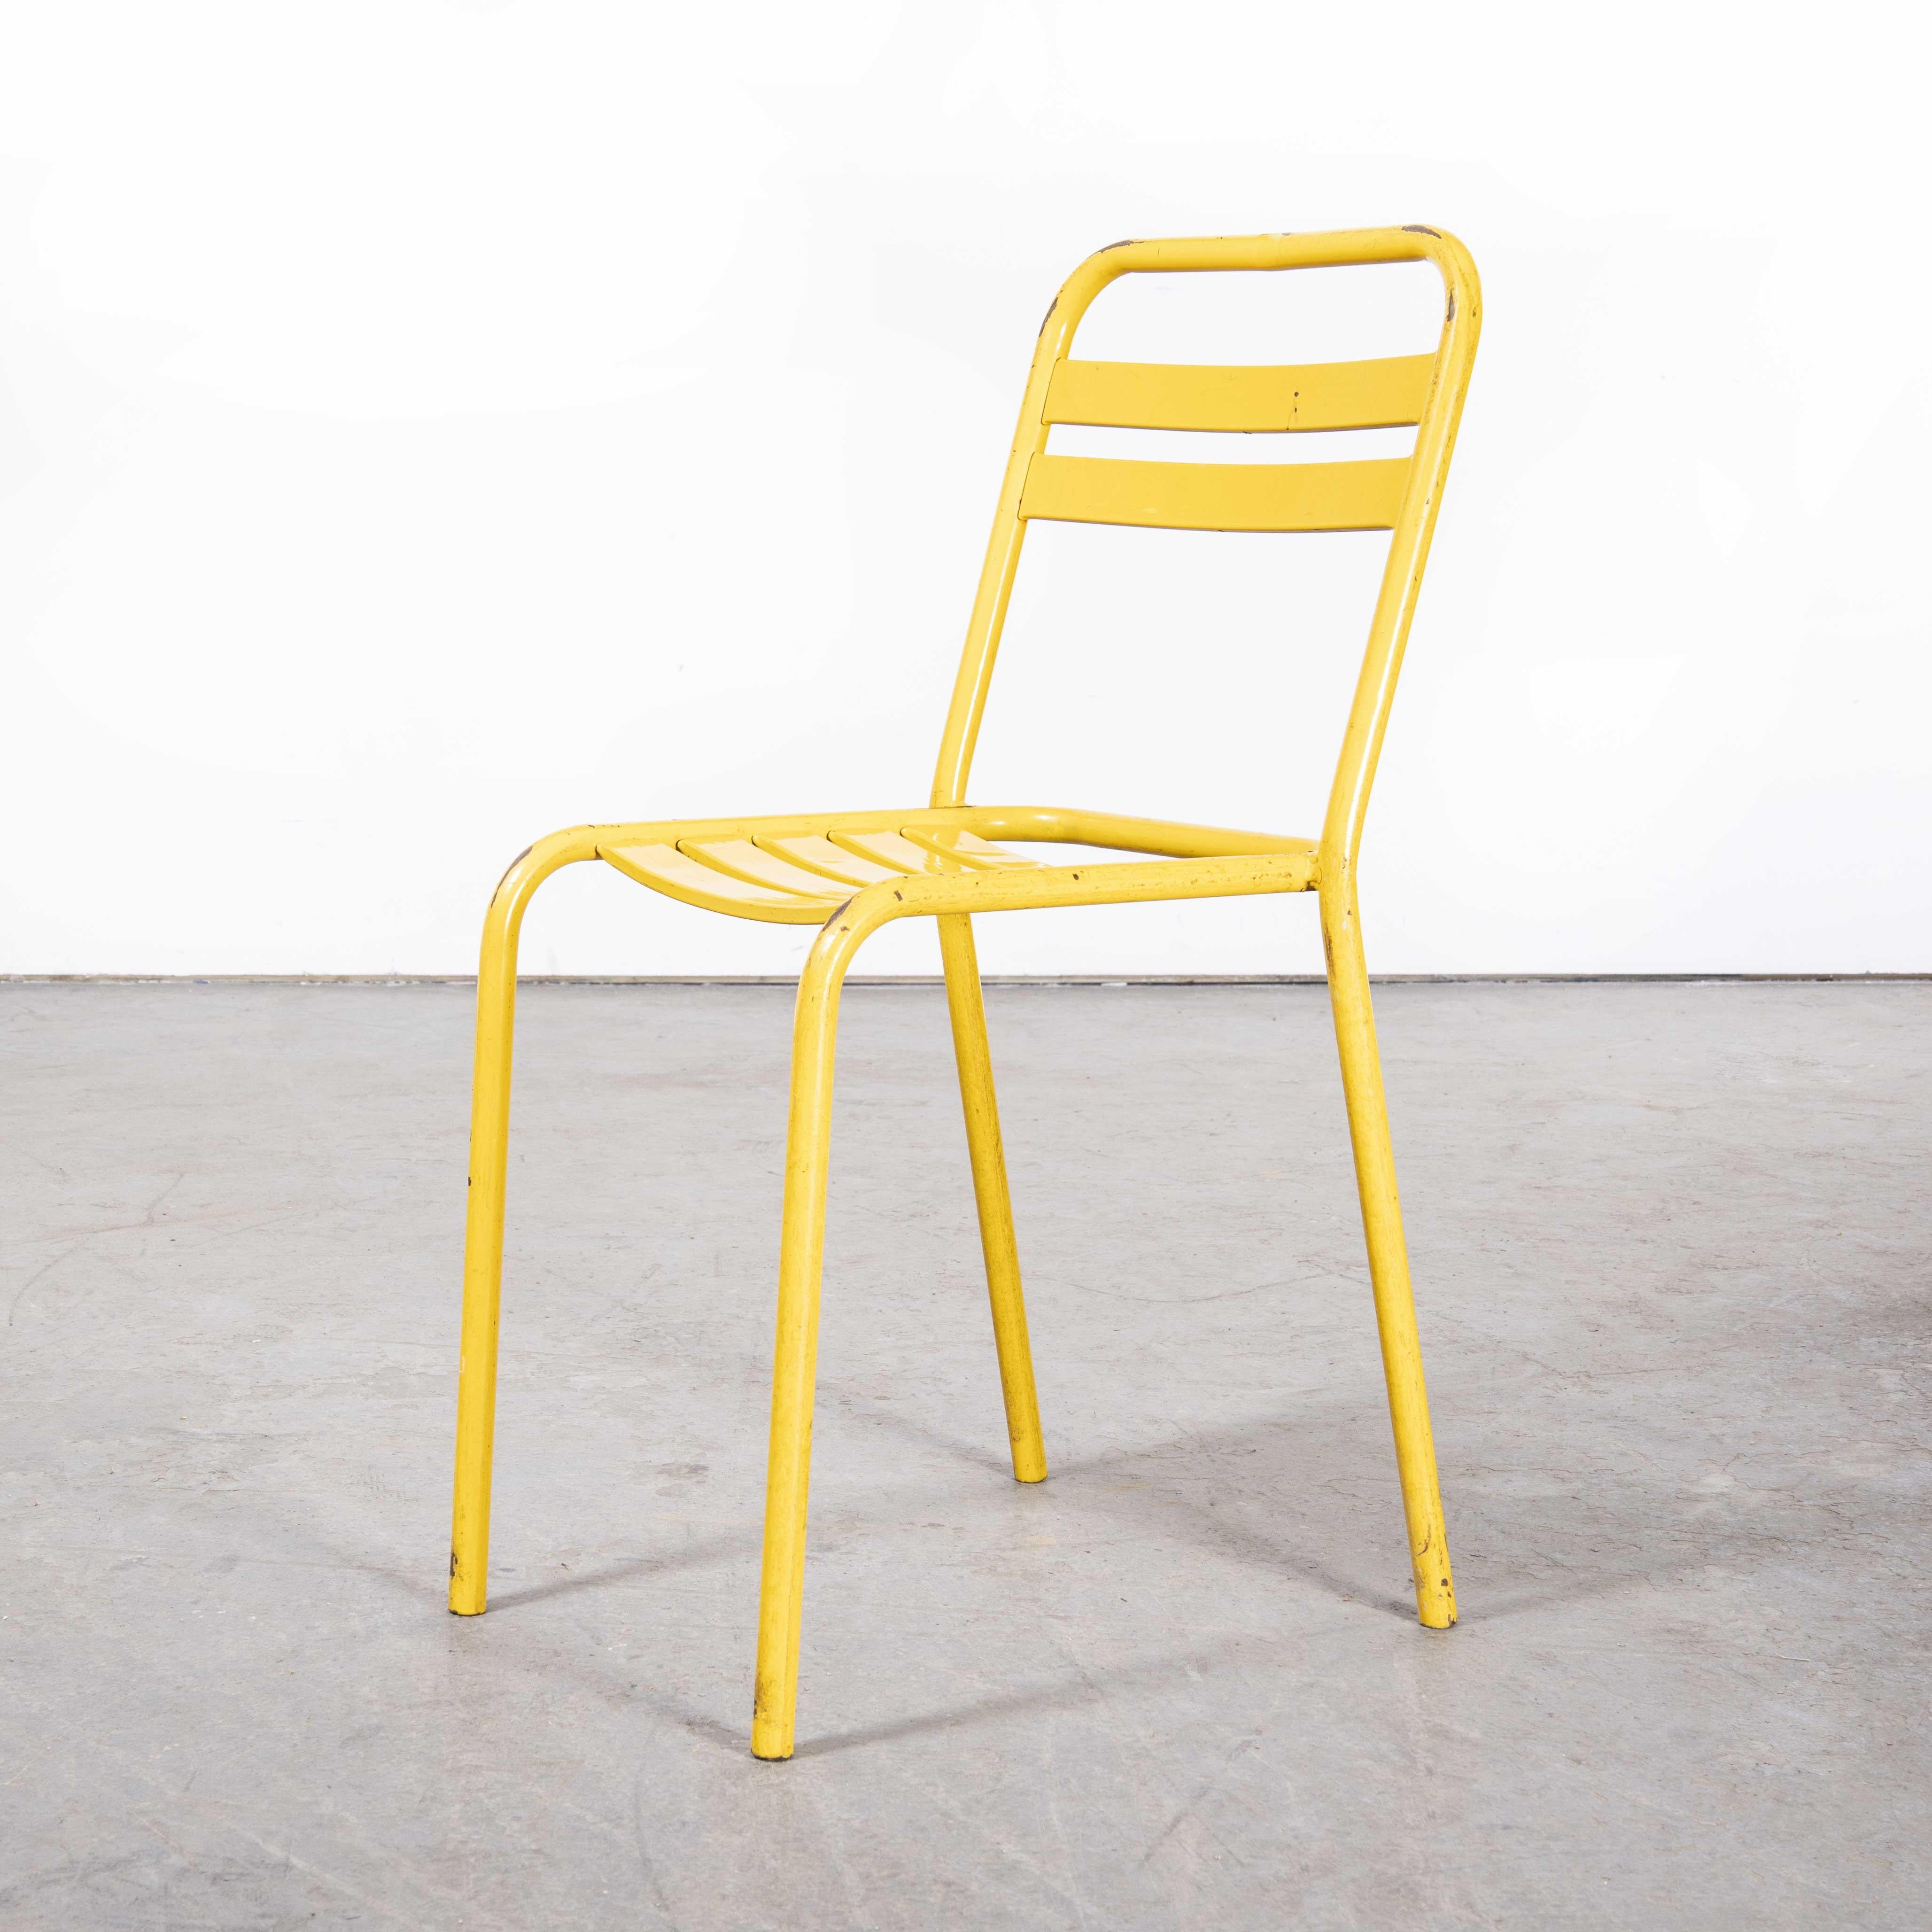 yellow metal chairs -china -b2b -forum -blog -wikipedia -.cn -.gov -alibaba